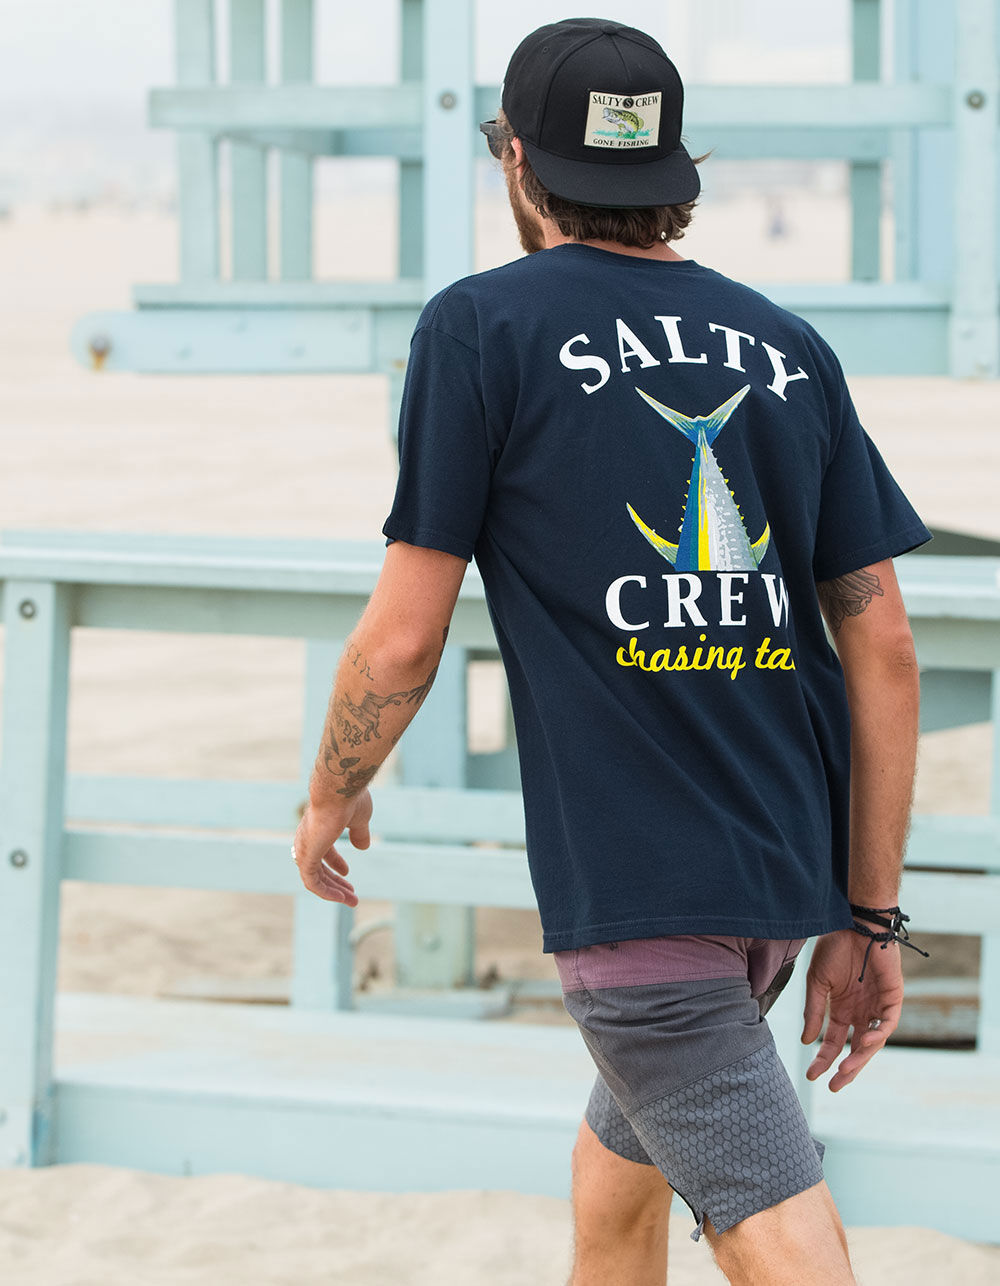 SALTY CREW Chasing Tail Mens T-Shirt